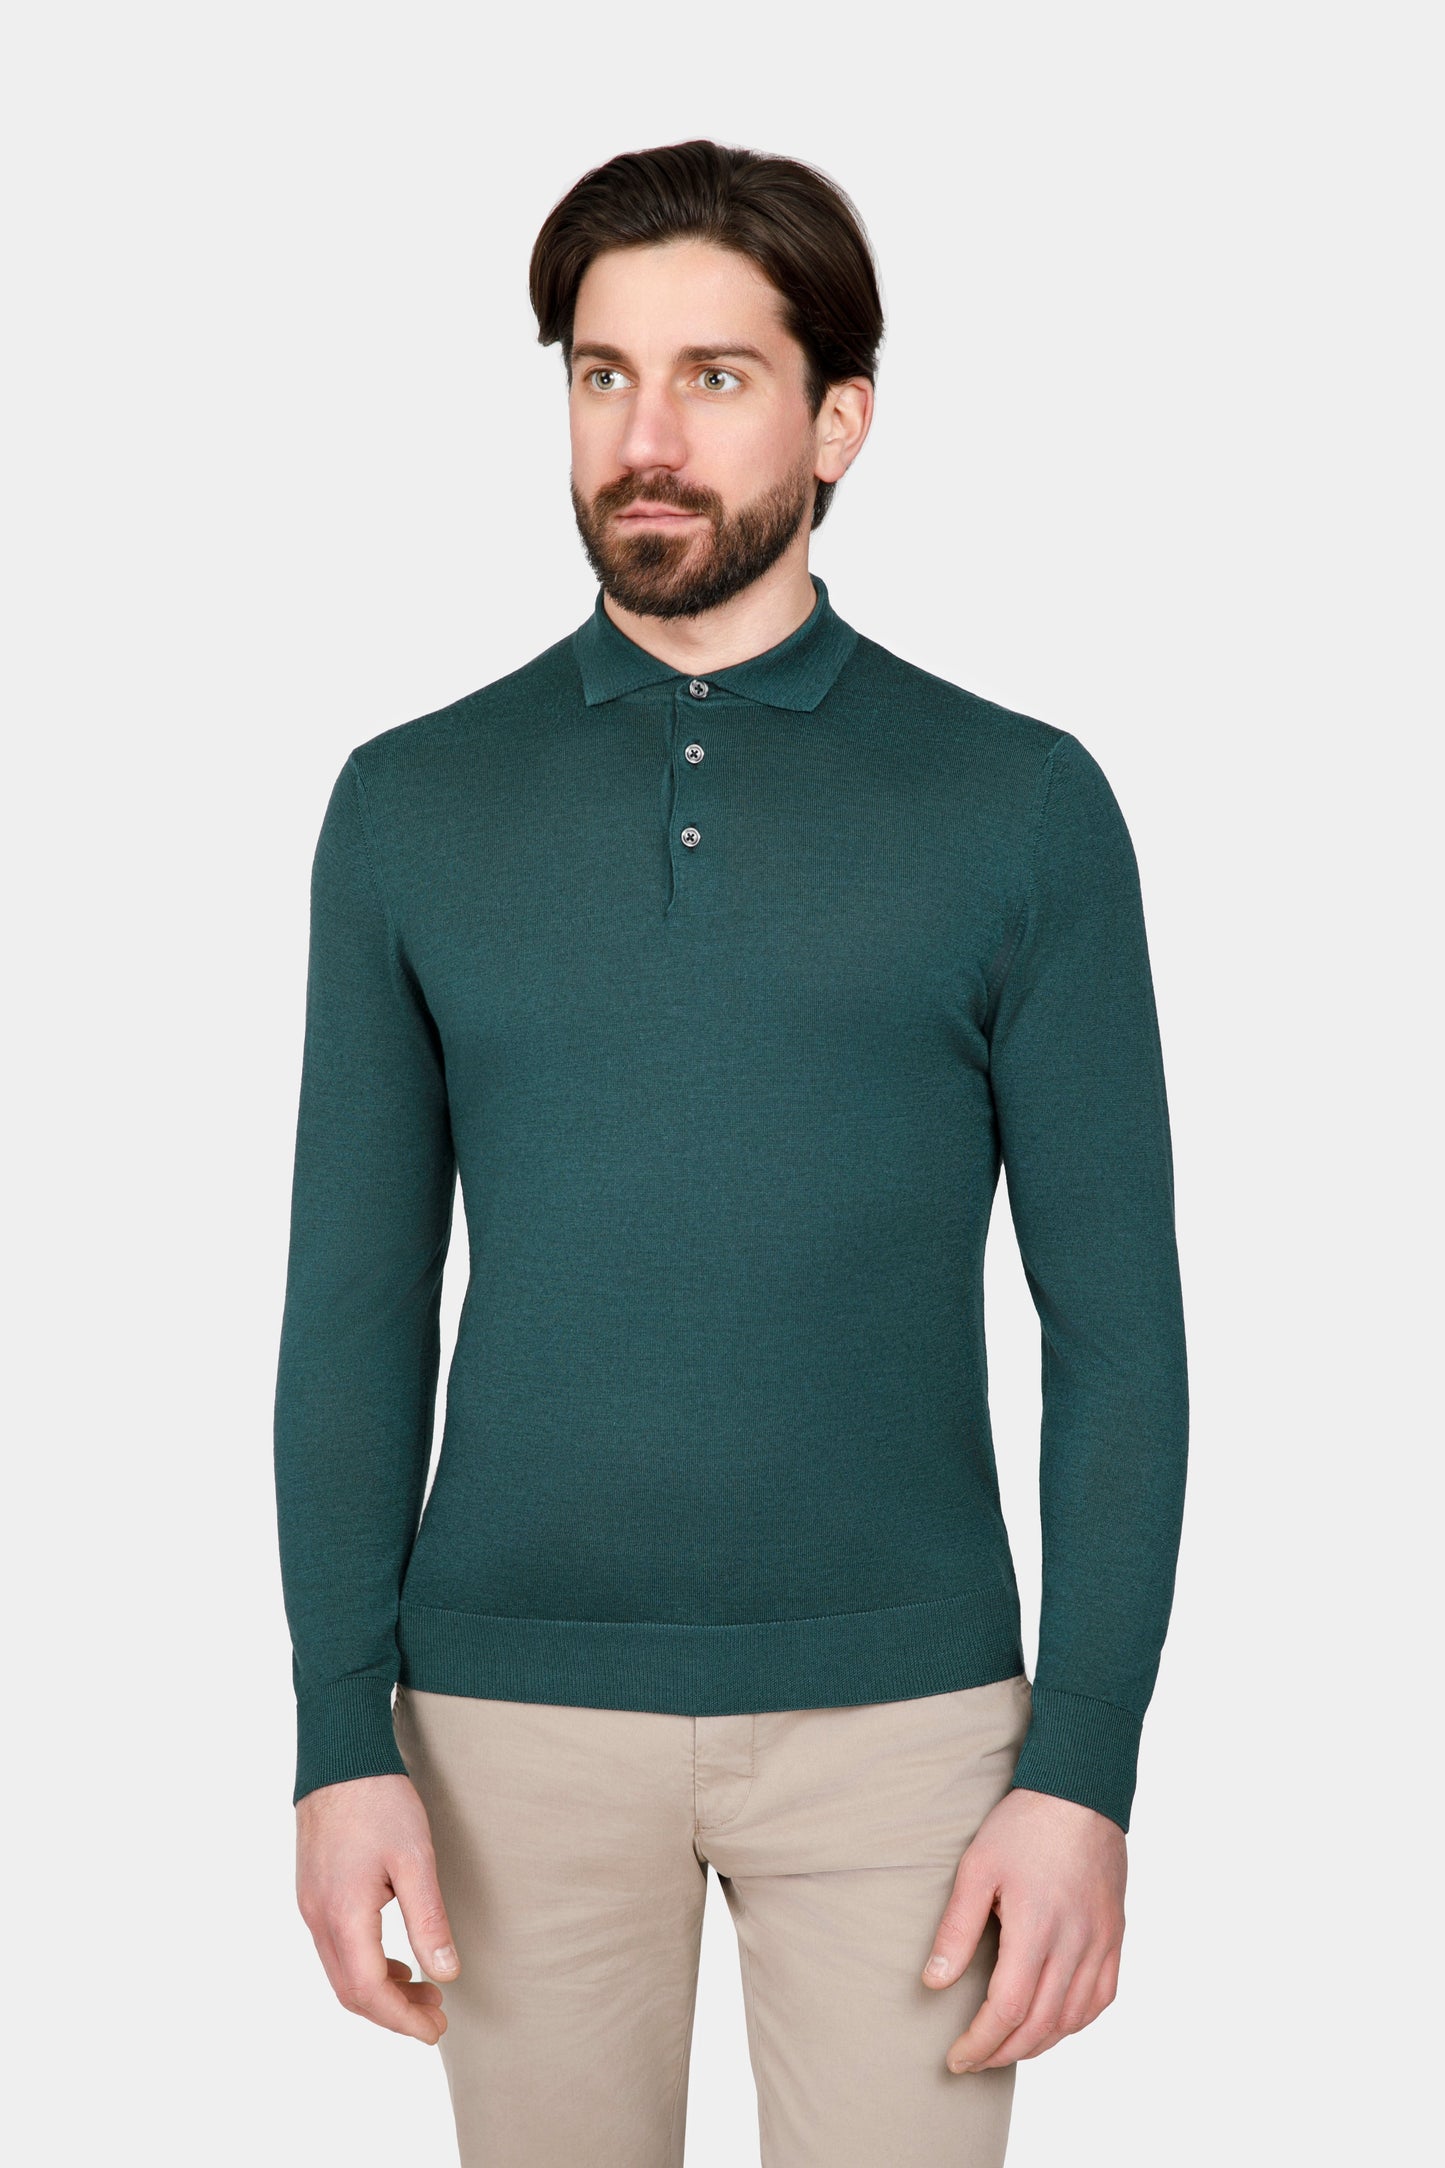 Green Long Sleeve Polo Shirt